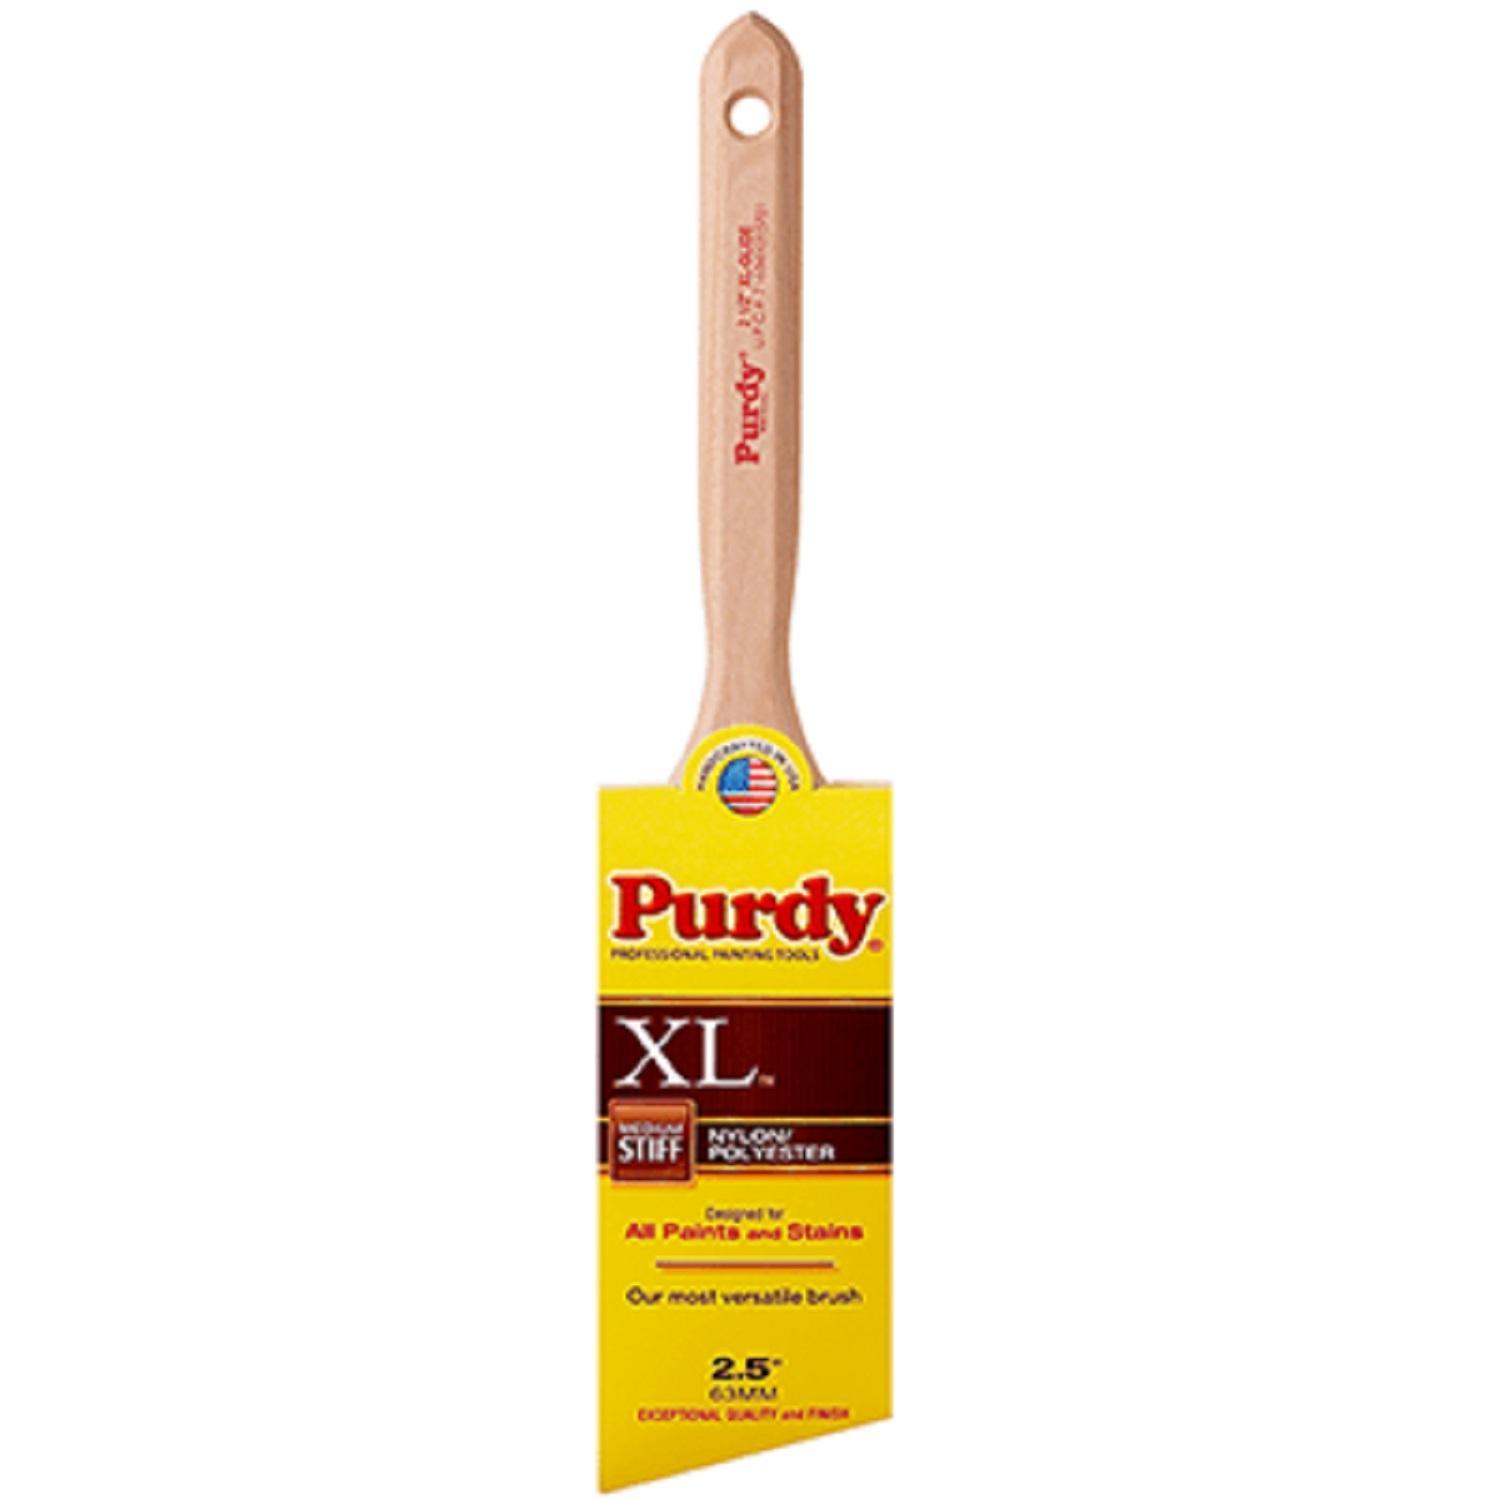 Purdy XL Series Glide Angular Paint Brush